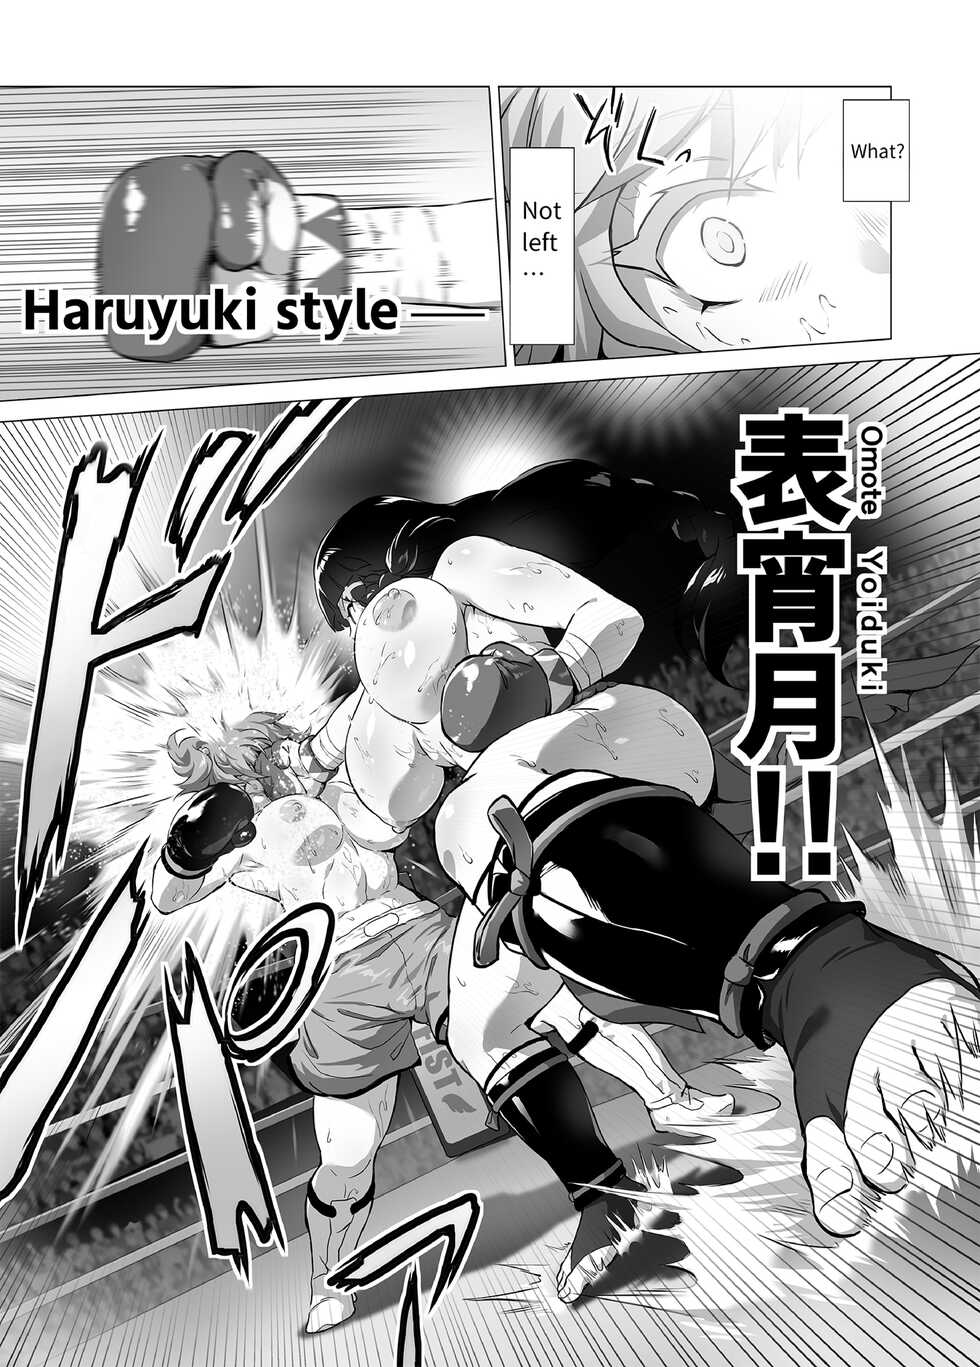 Mahiro STANDUP! Manga Ver. ~An New Foe Appears! Meet the Lovely Yuzuki~ - Page 9